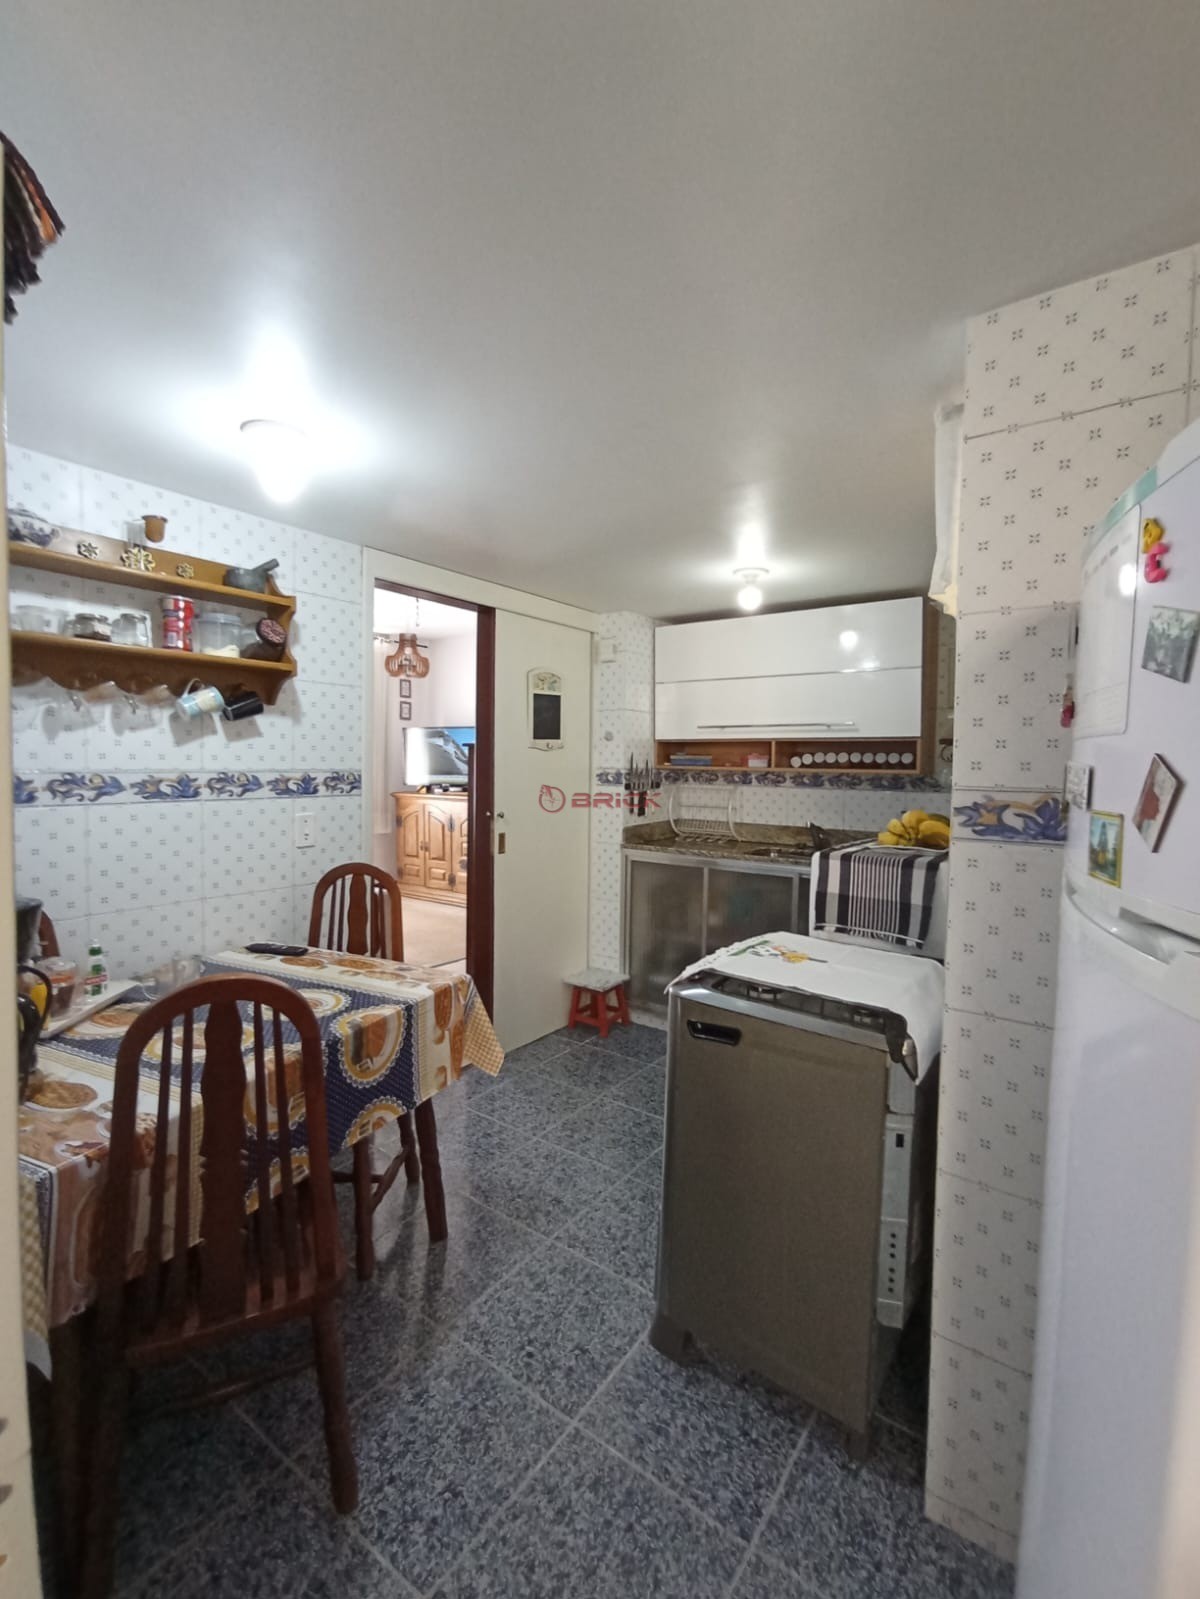 Apartamento à venda em Tijuca, Teresópolis - RJ - Foto 11